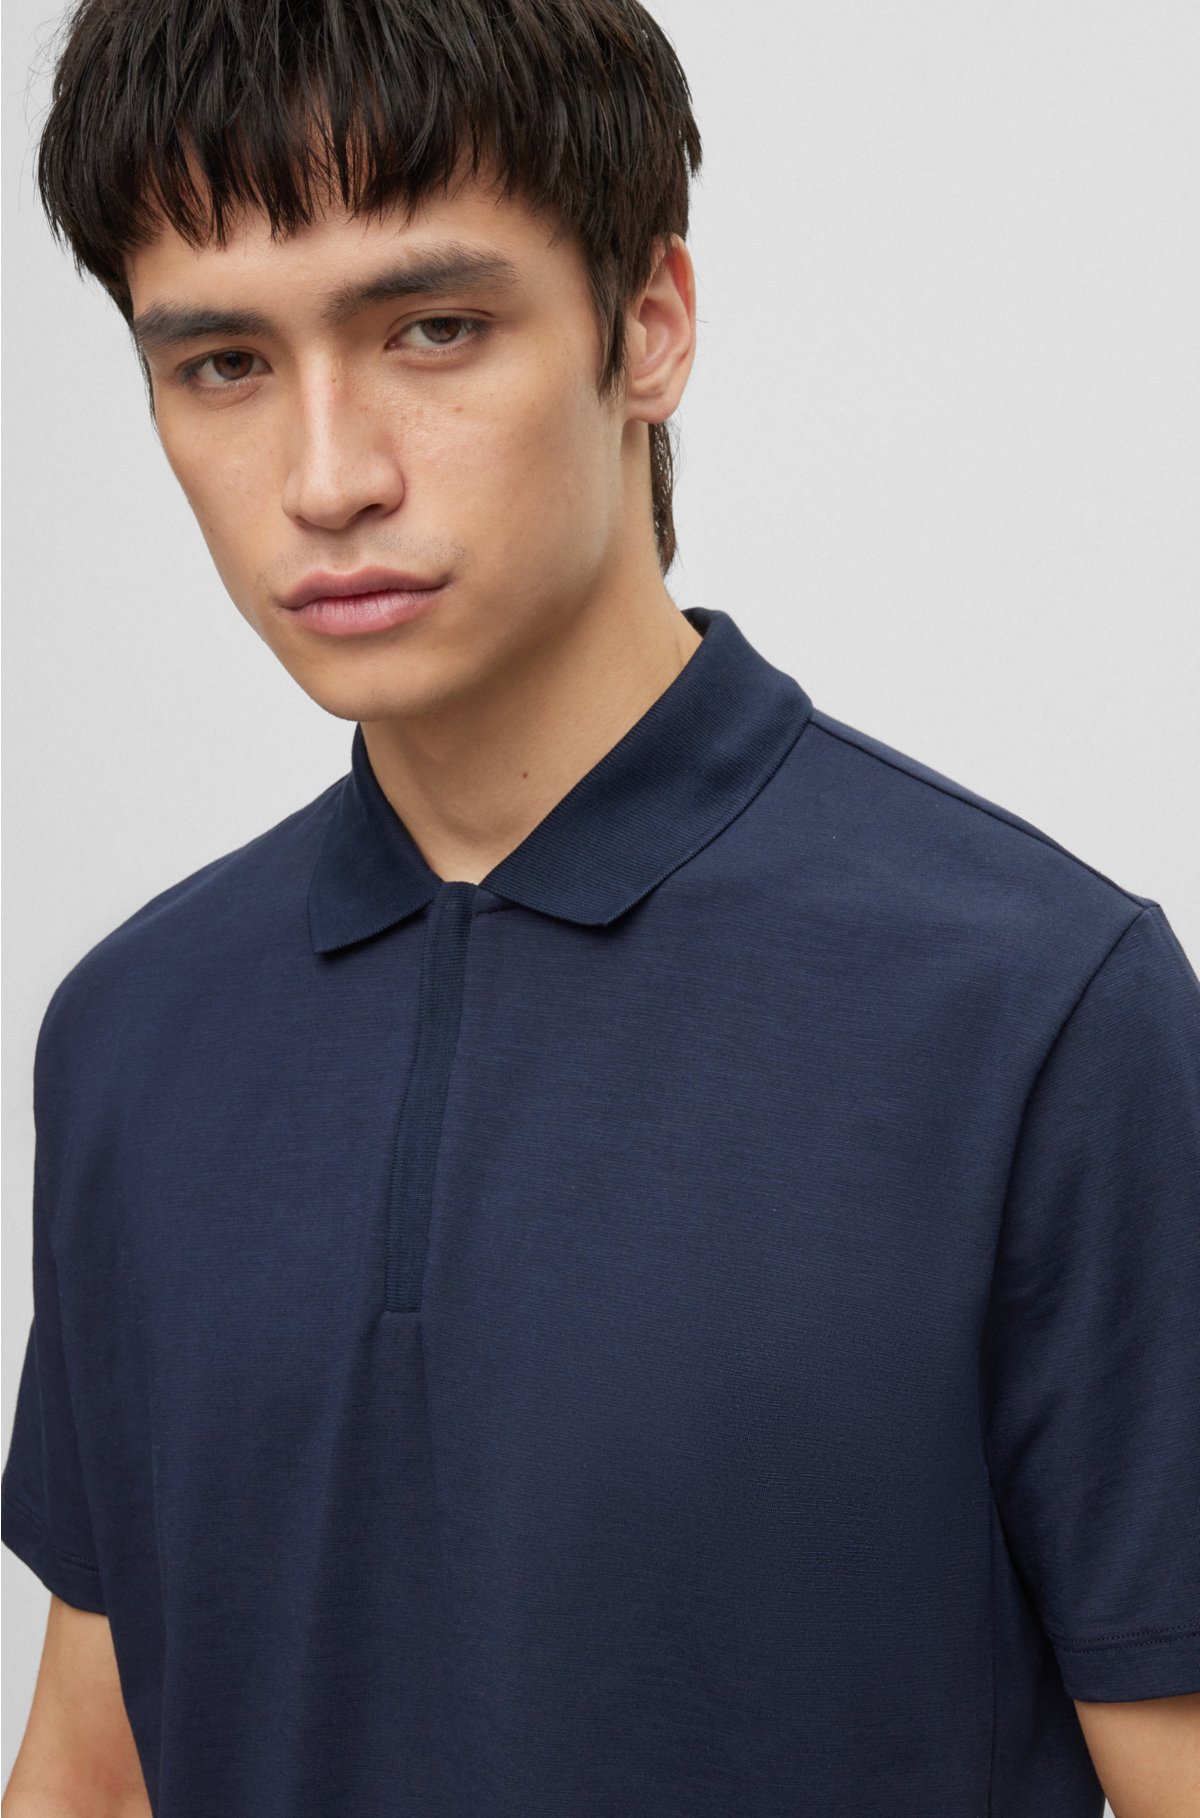 collar HUGO shirt jersey Cotton-blend - zip polo with